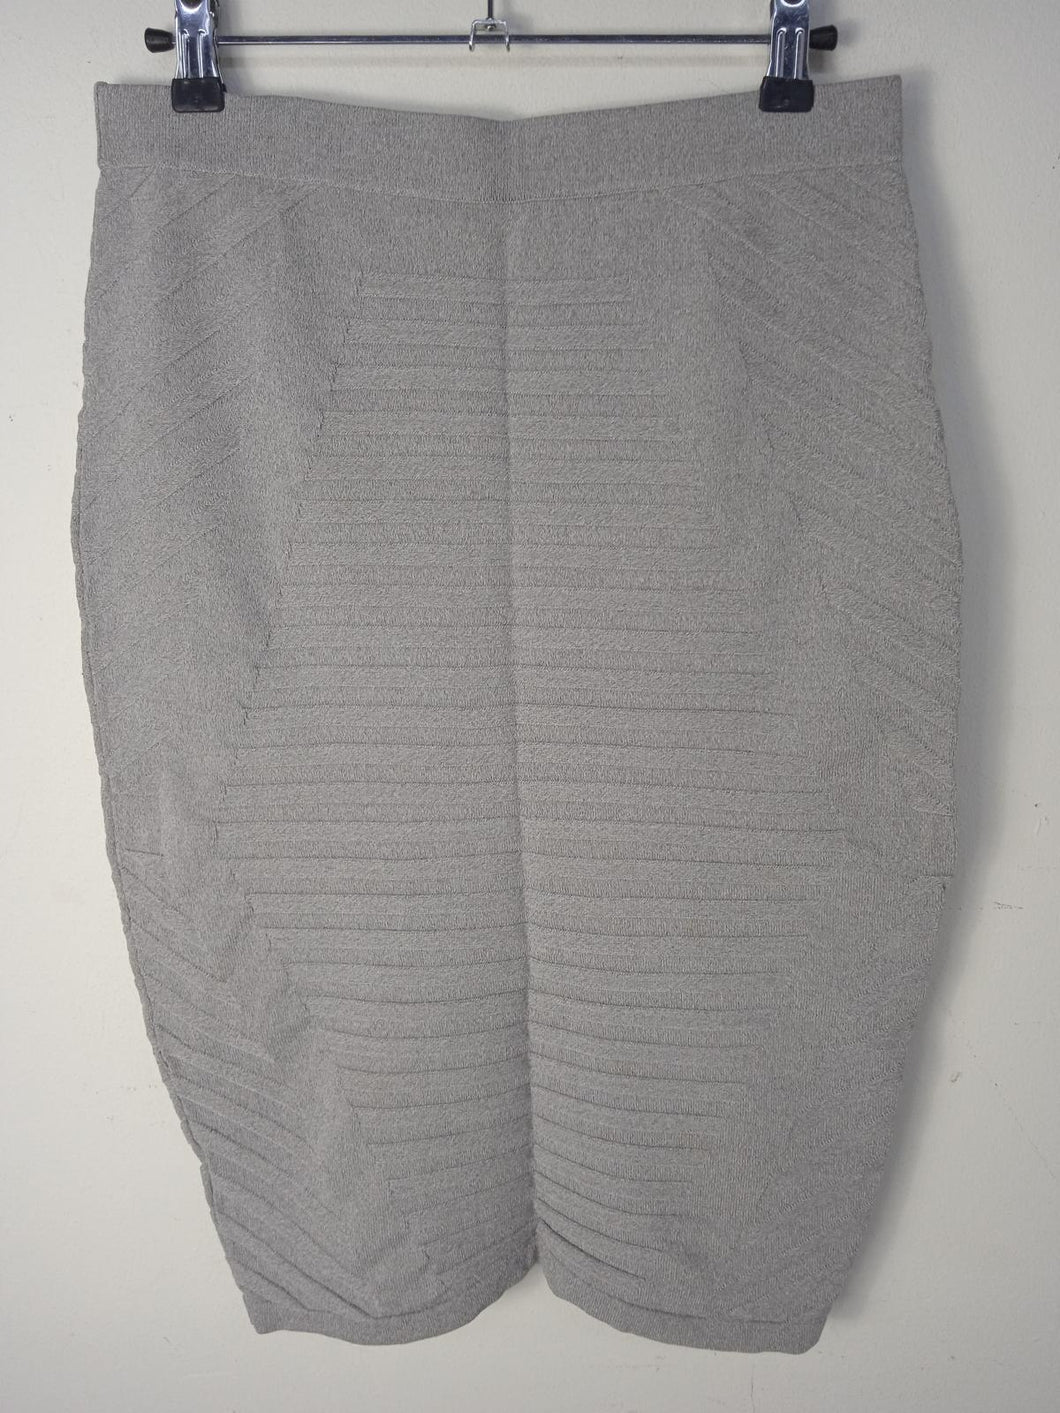 JONATHAN SIMKHAI Ladies Grey Knee Length Pencil Skirt Size S